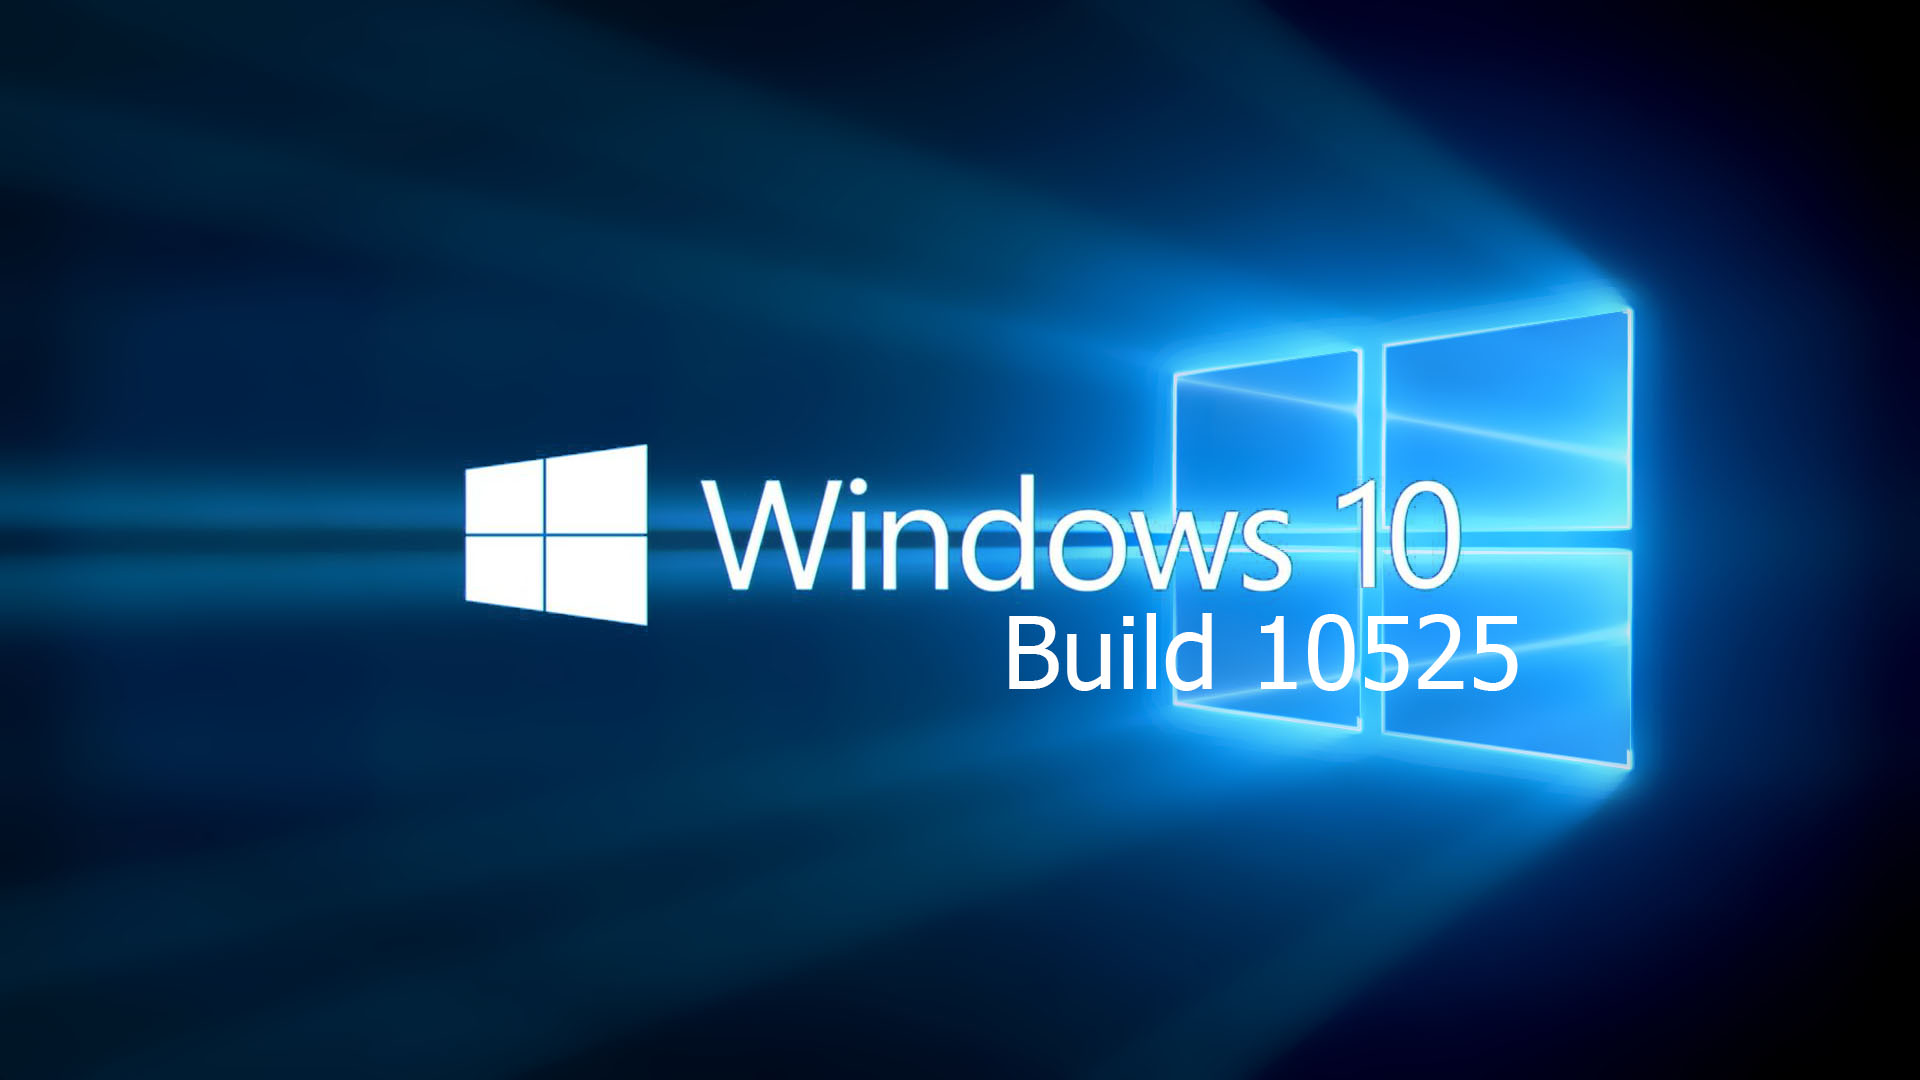 Windows 10 Build 10525